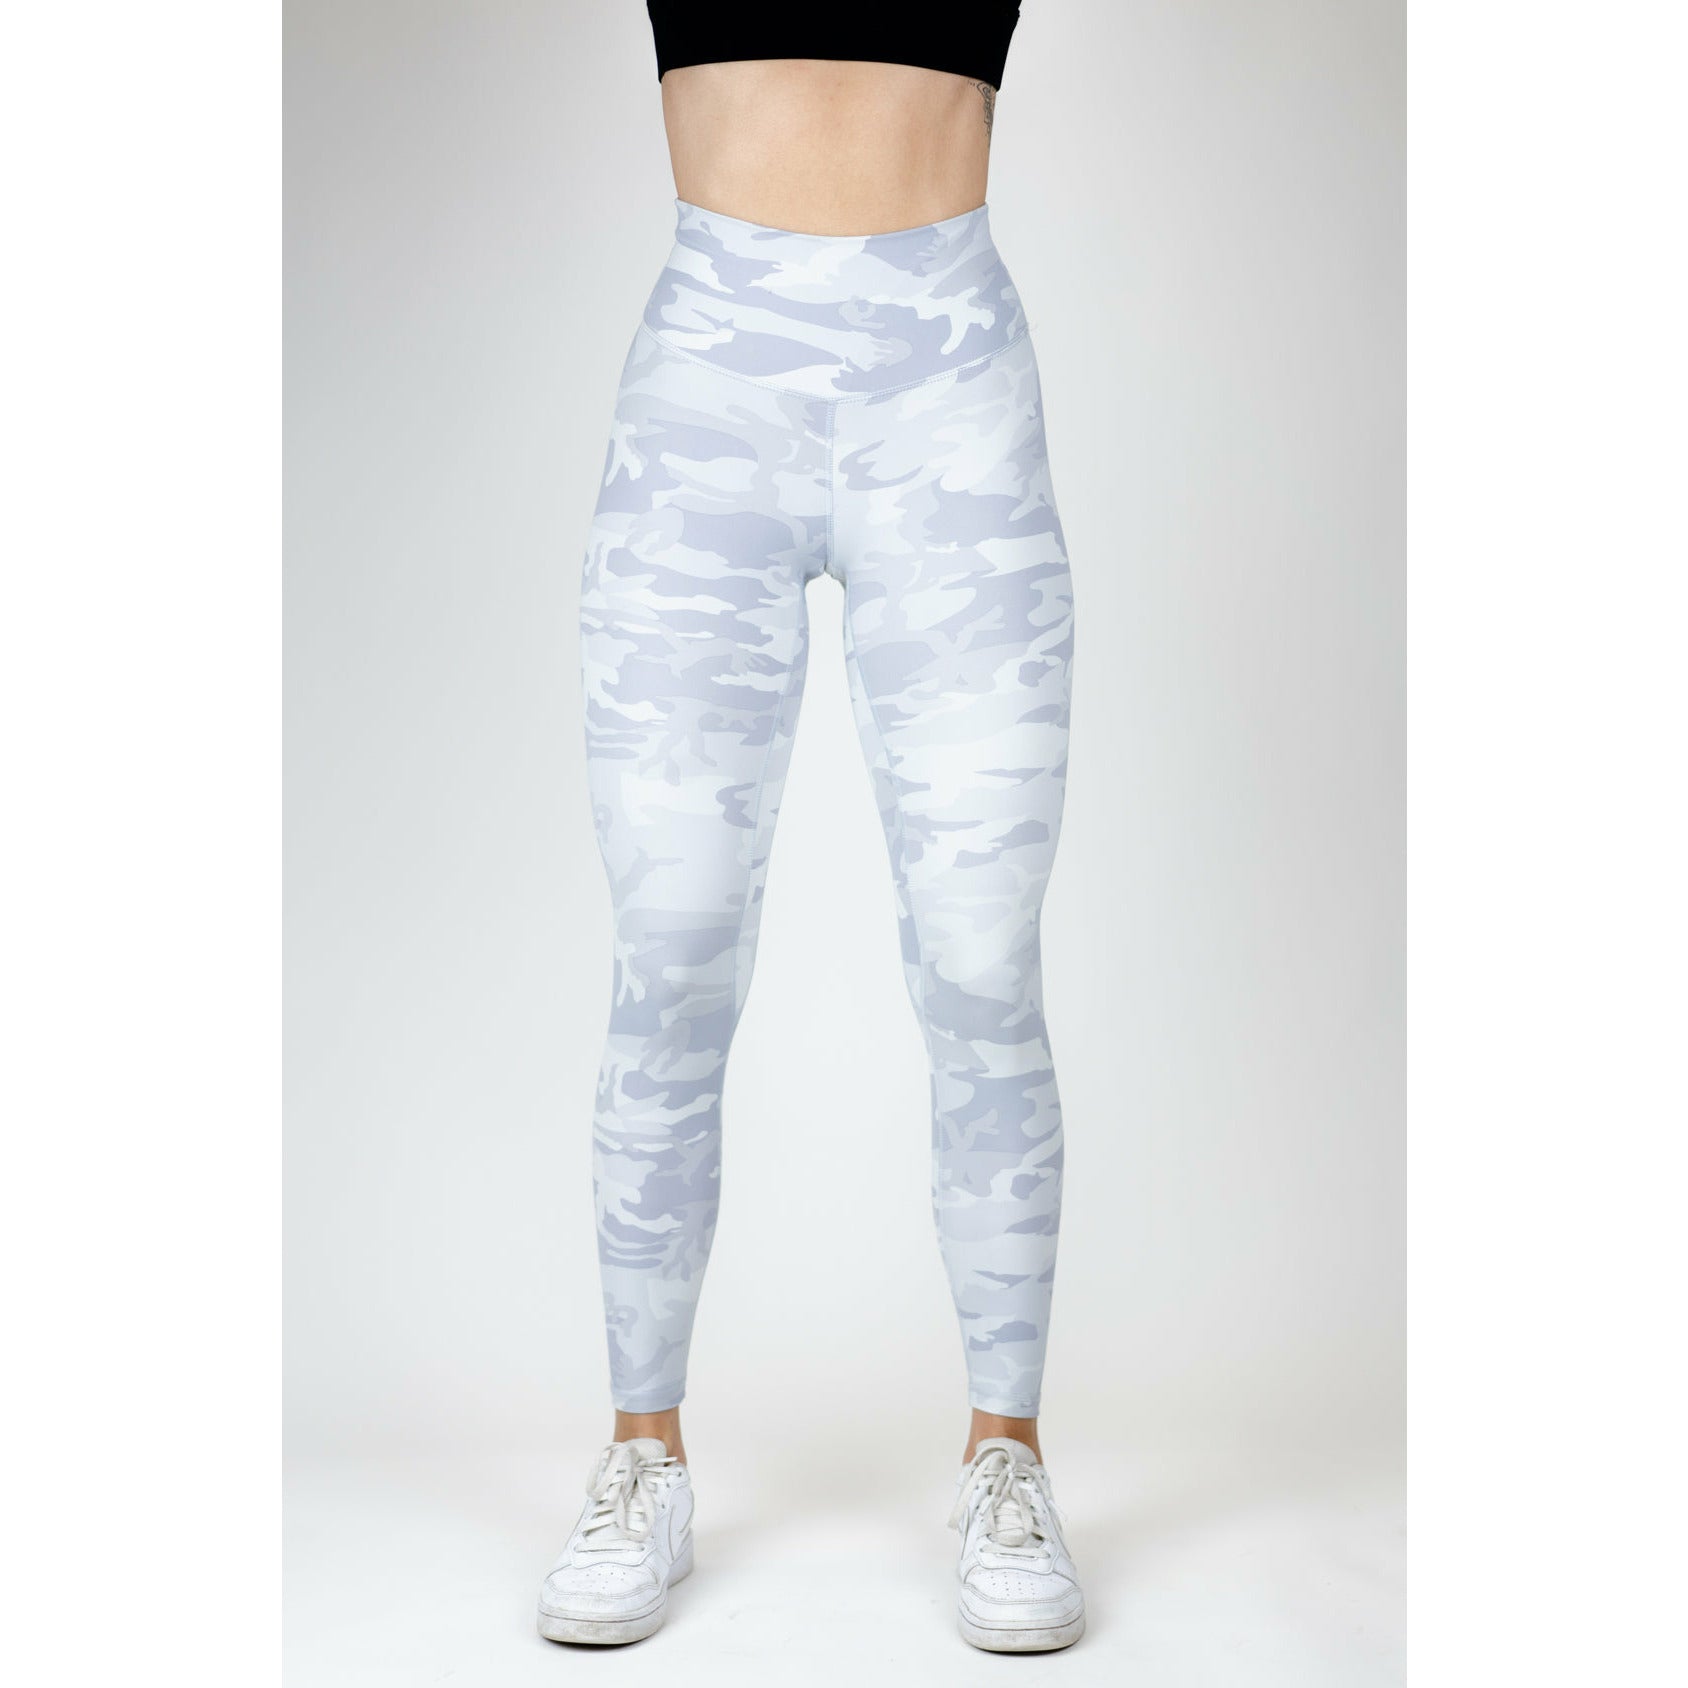 Lululemon Gray White Camo Leggings Size 2 - $33 (65% Off Retail